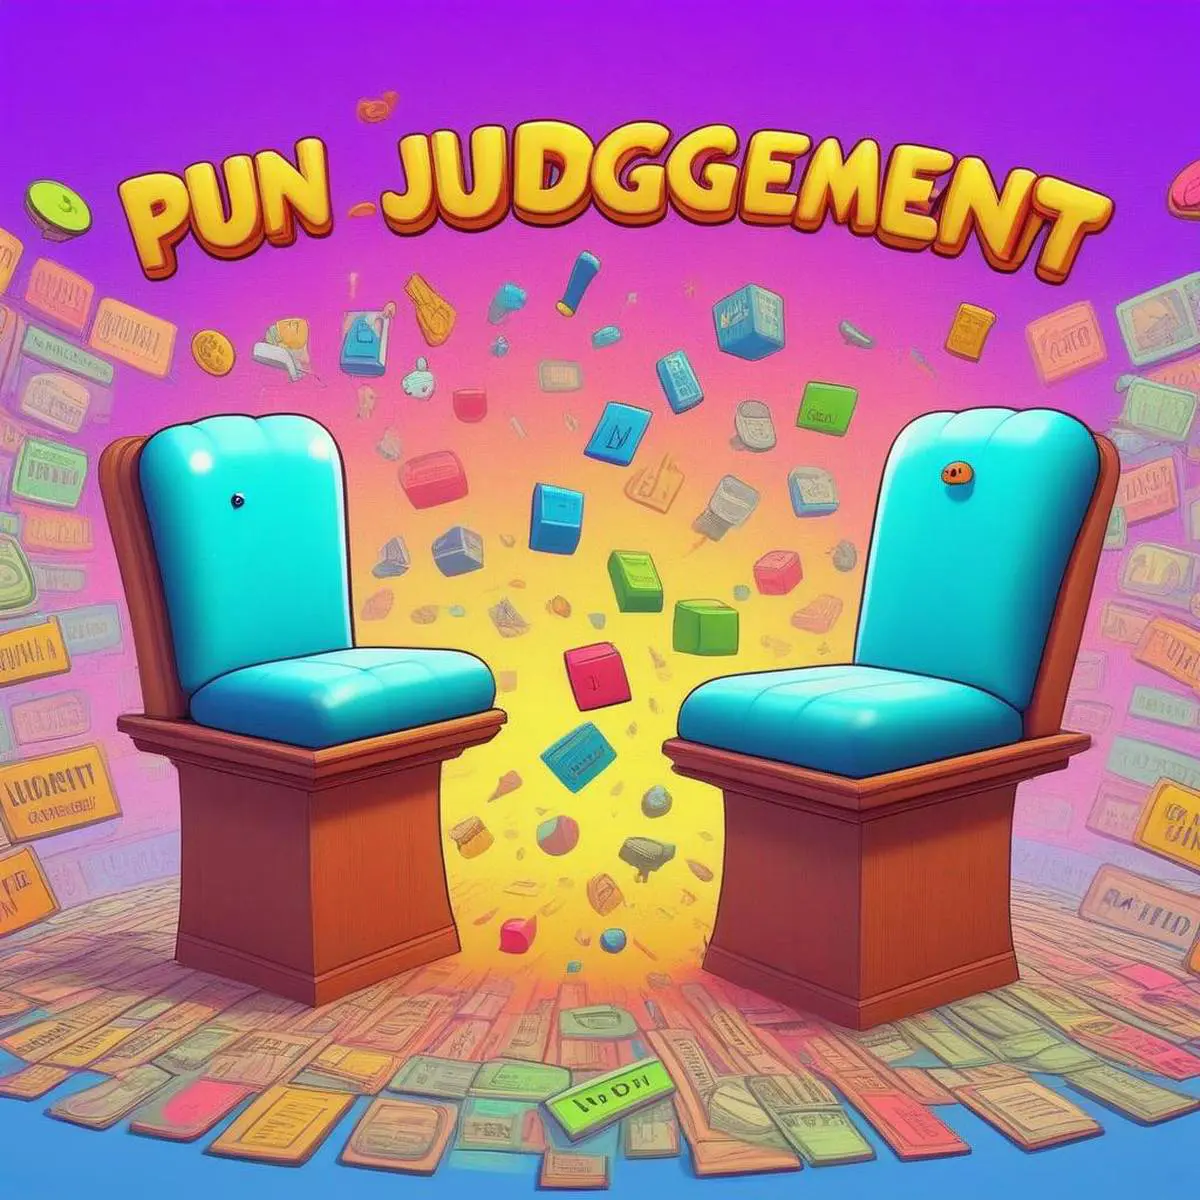 Judgment puns